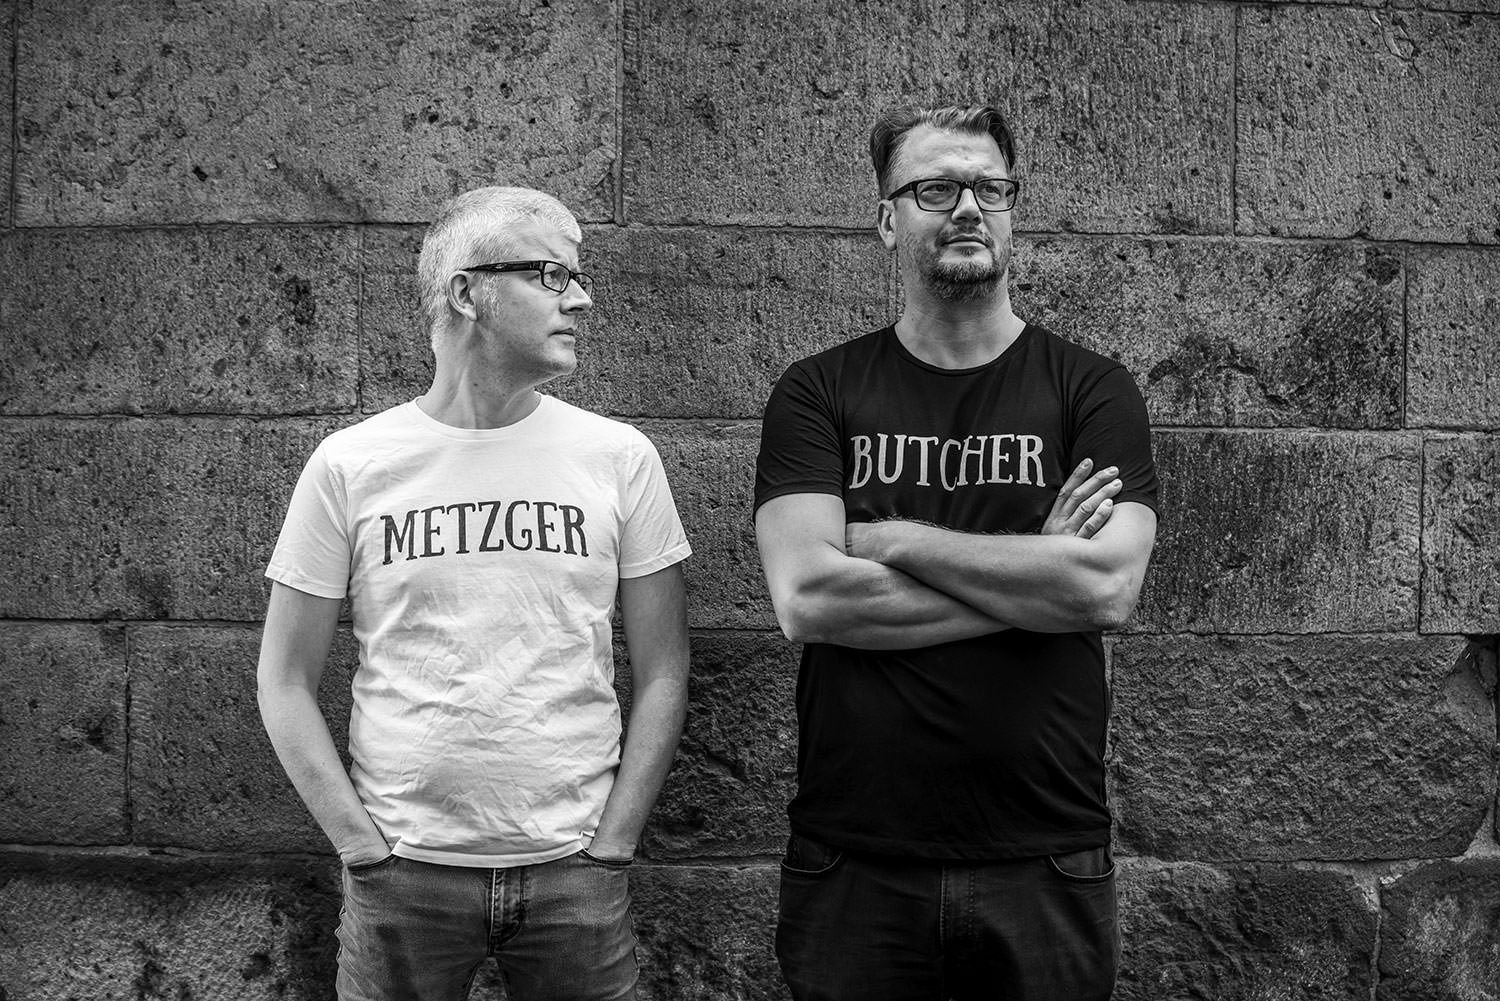 MetzgerButcher: Kultur